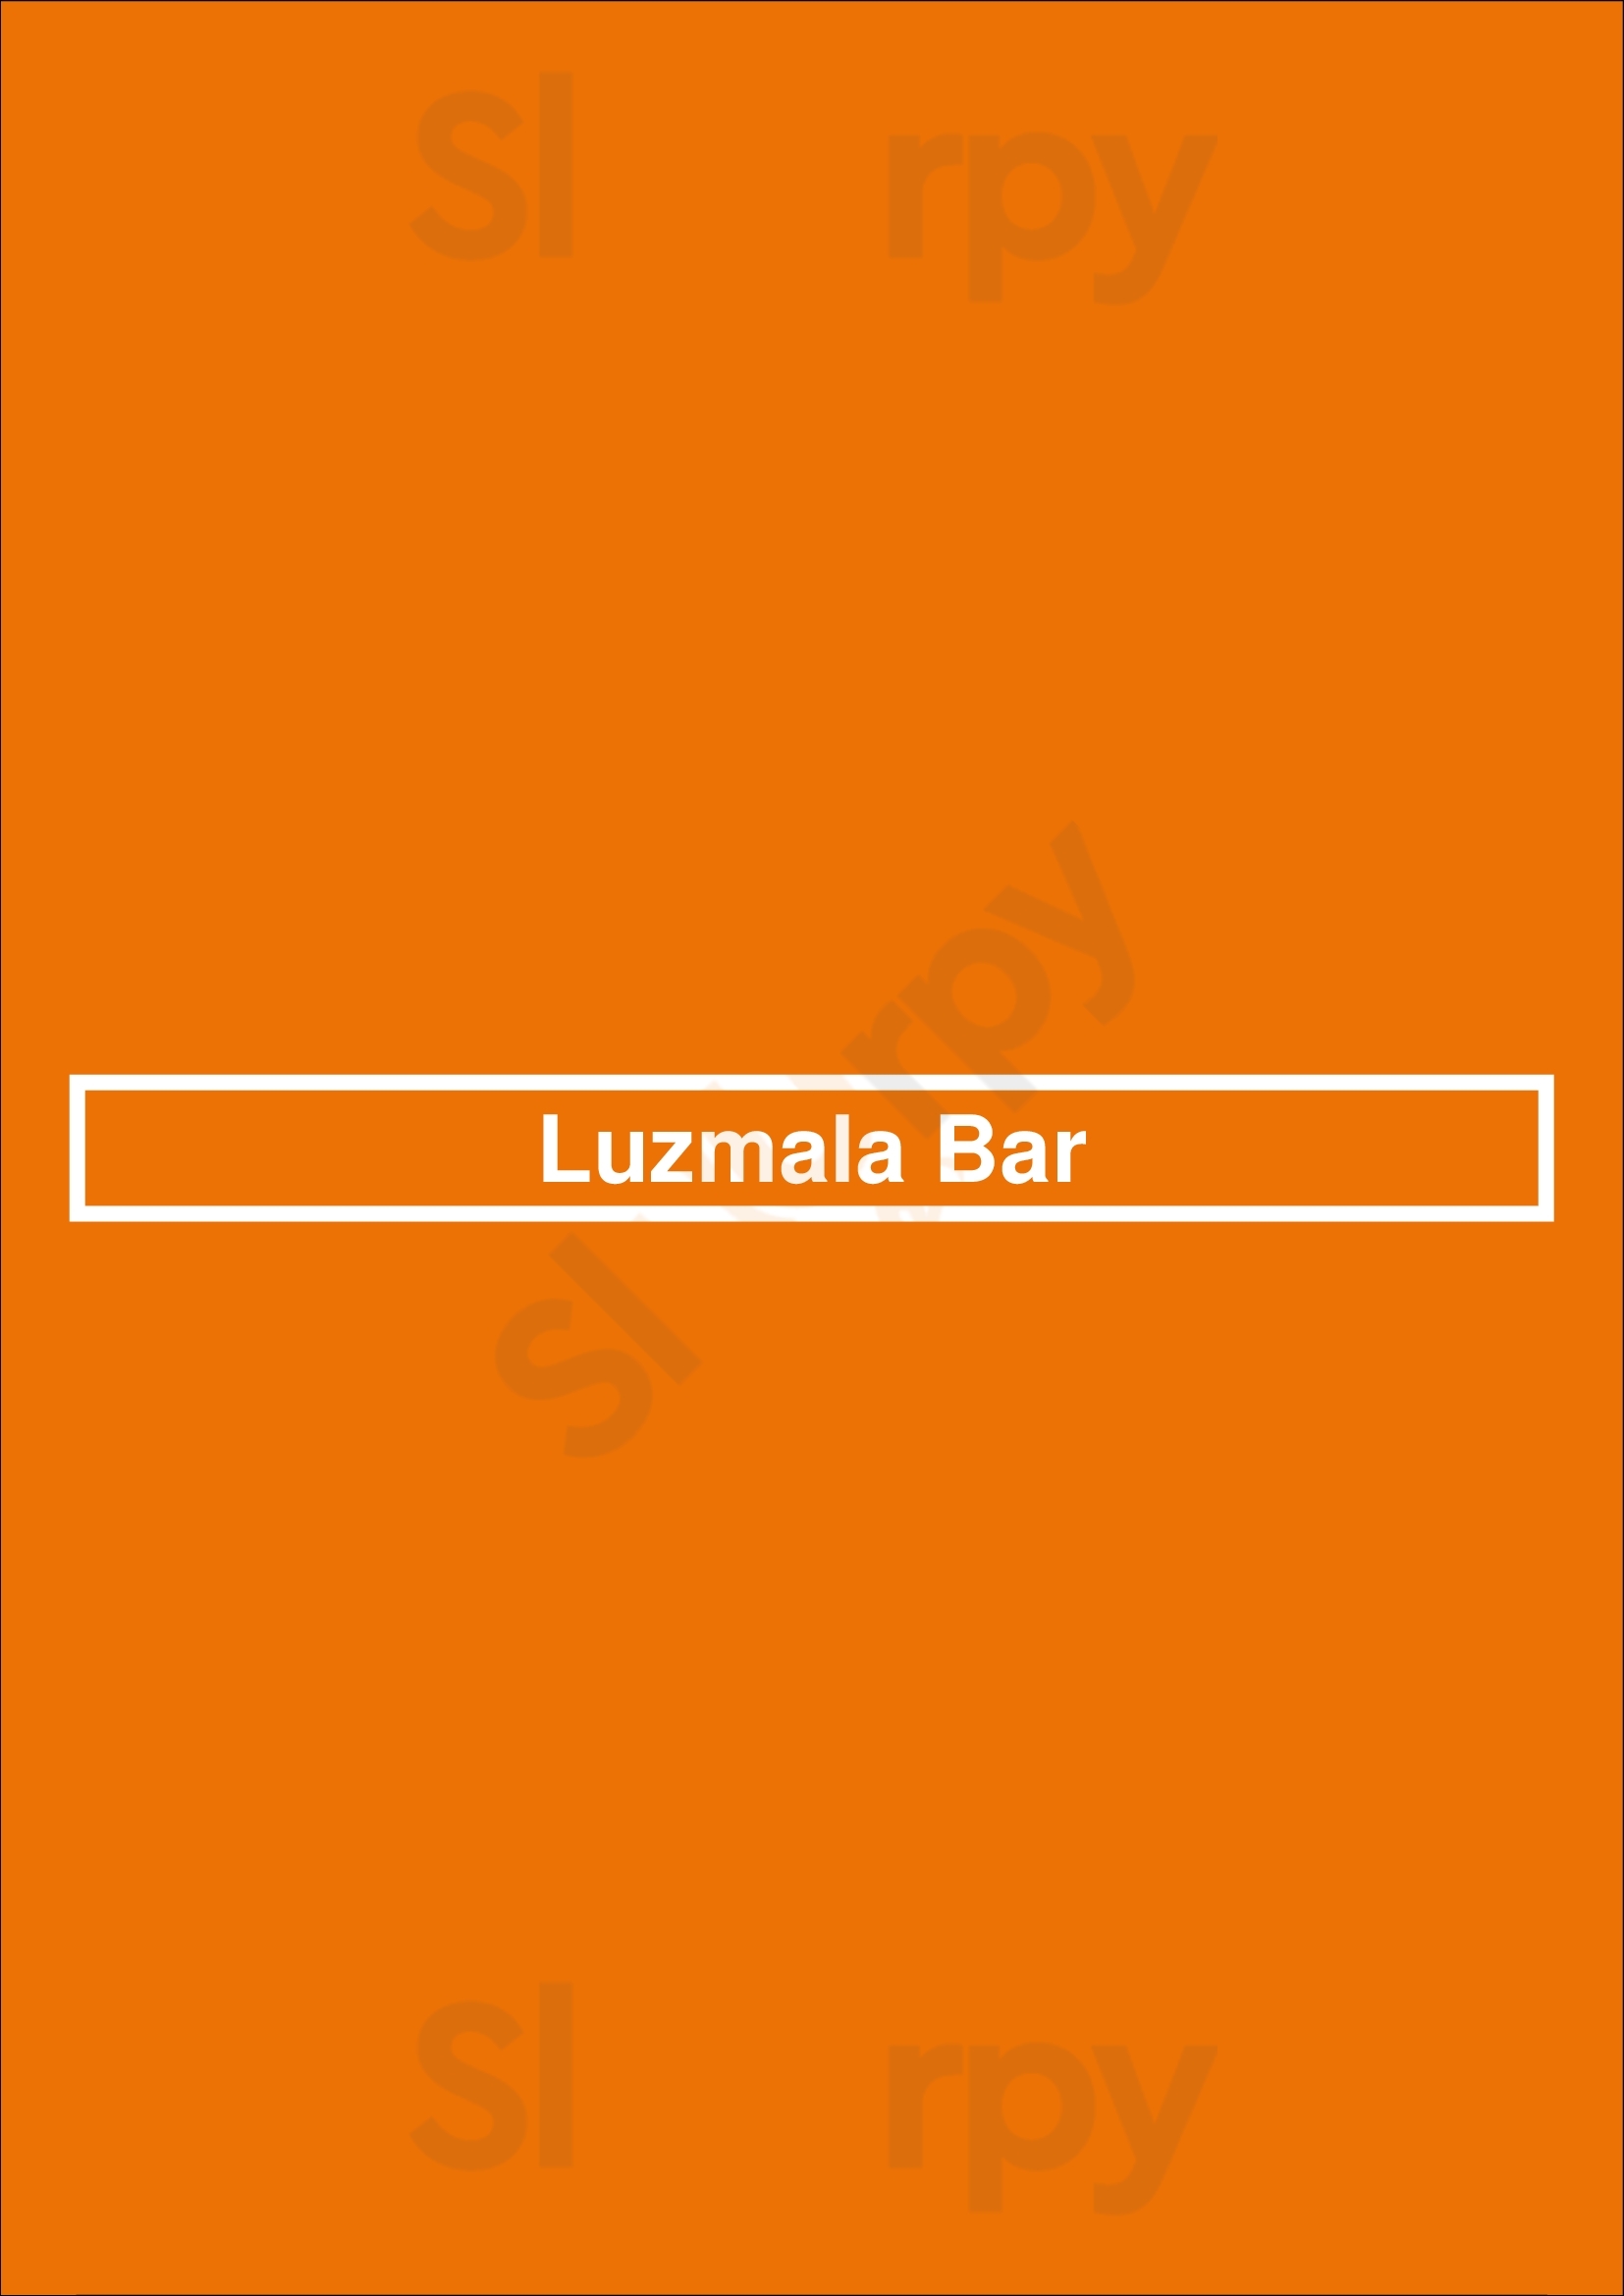 Luzmala Bar Buenos Aires Menu - 1